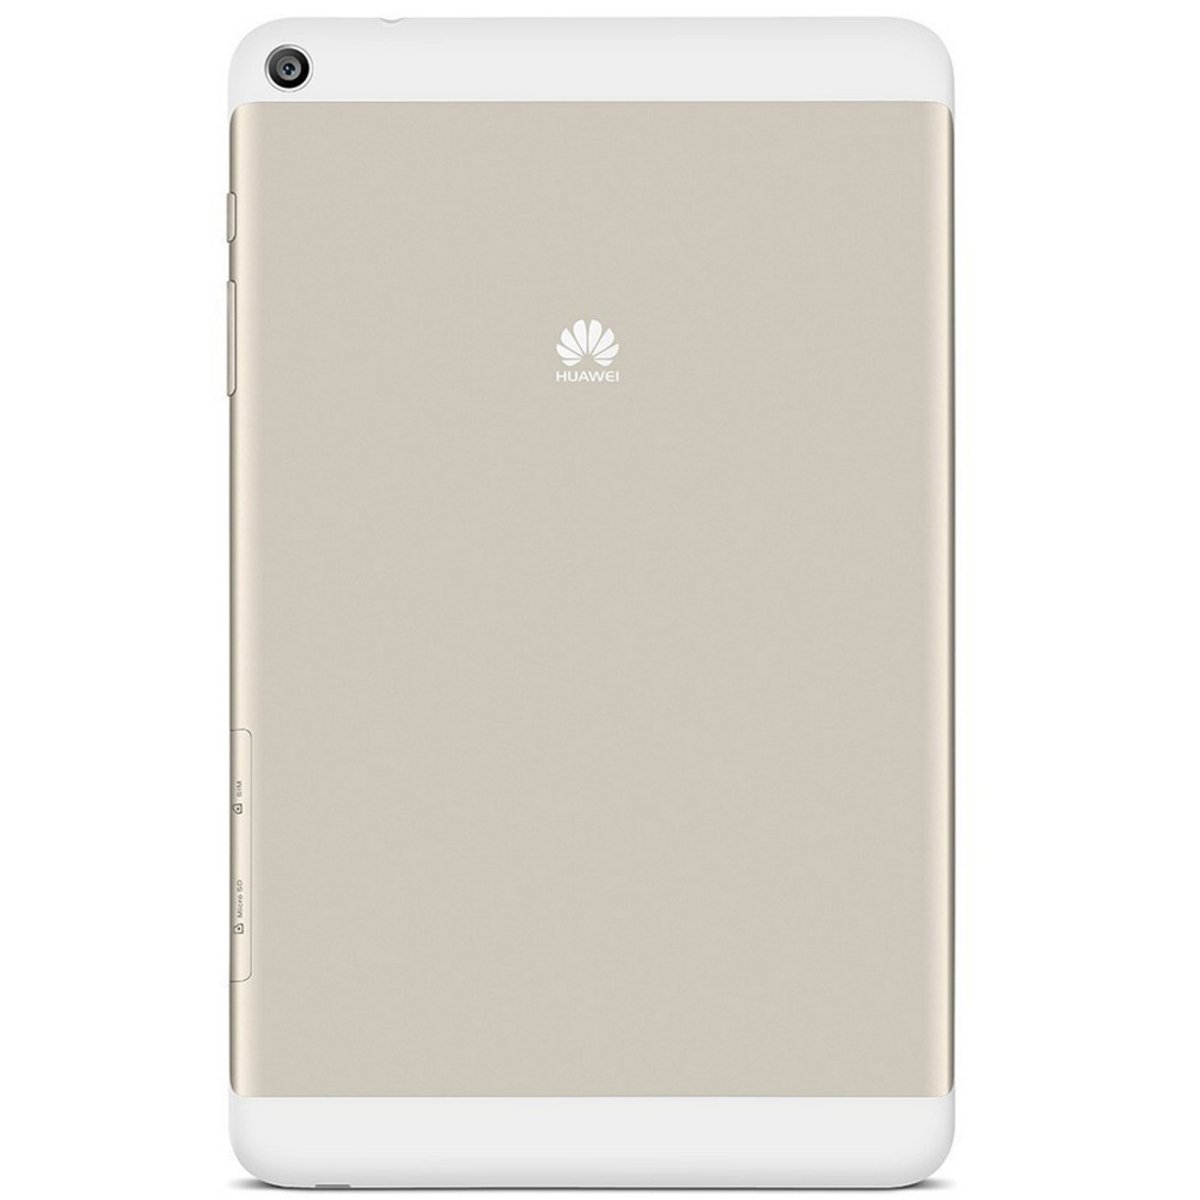 Huawei MediaPad T1-821L 8inch 4G Wi-Fi 16GB Gold